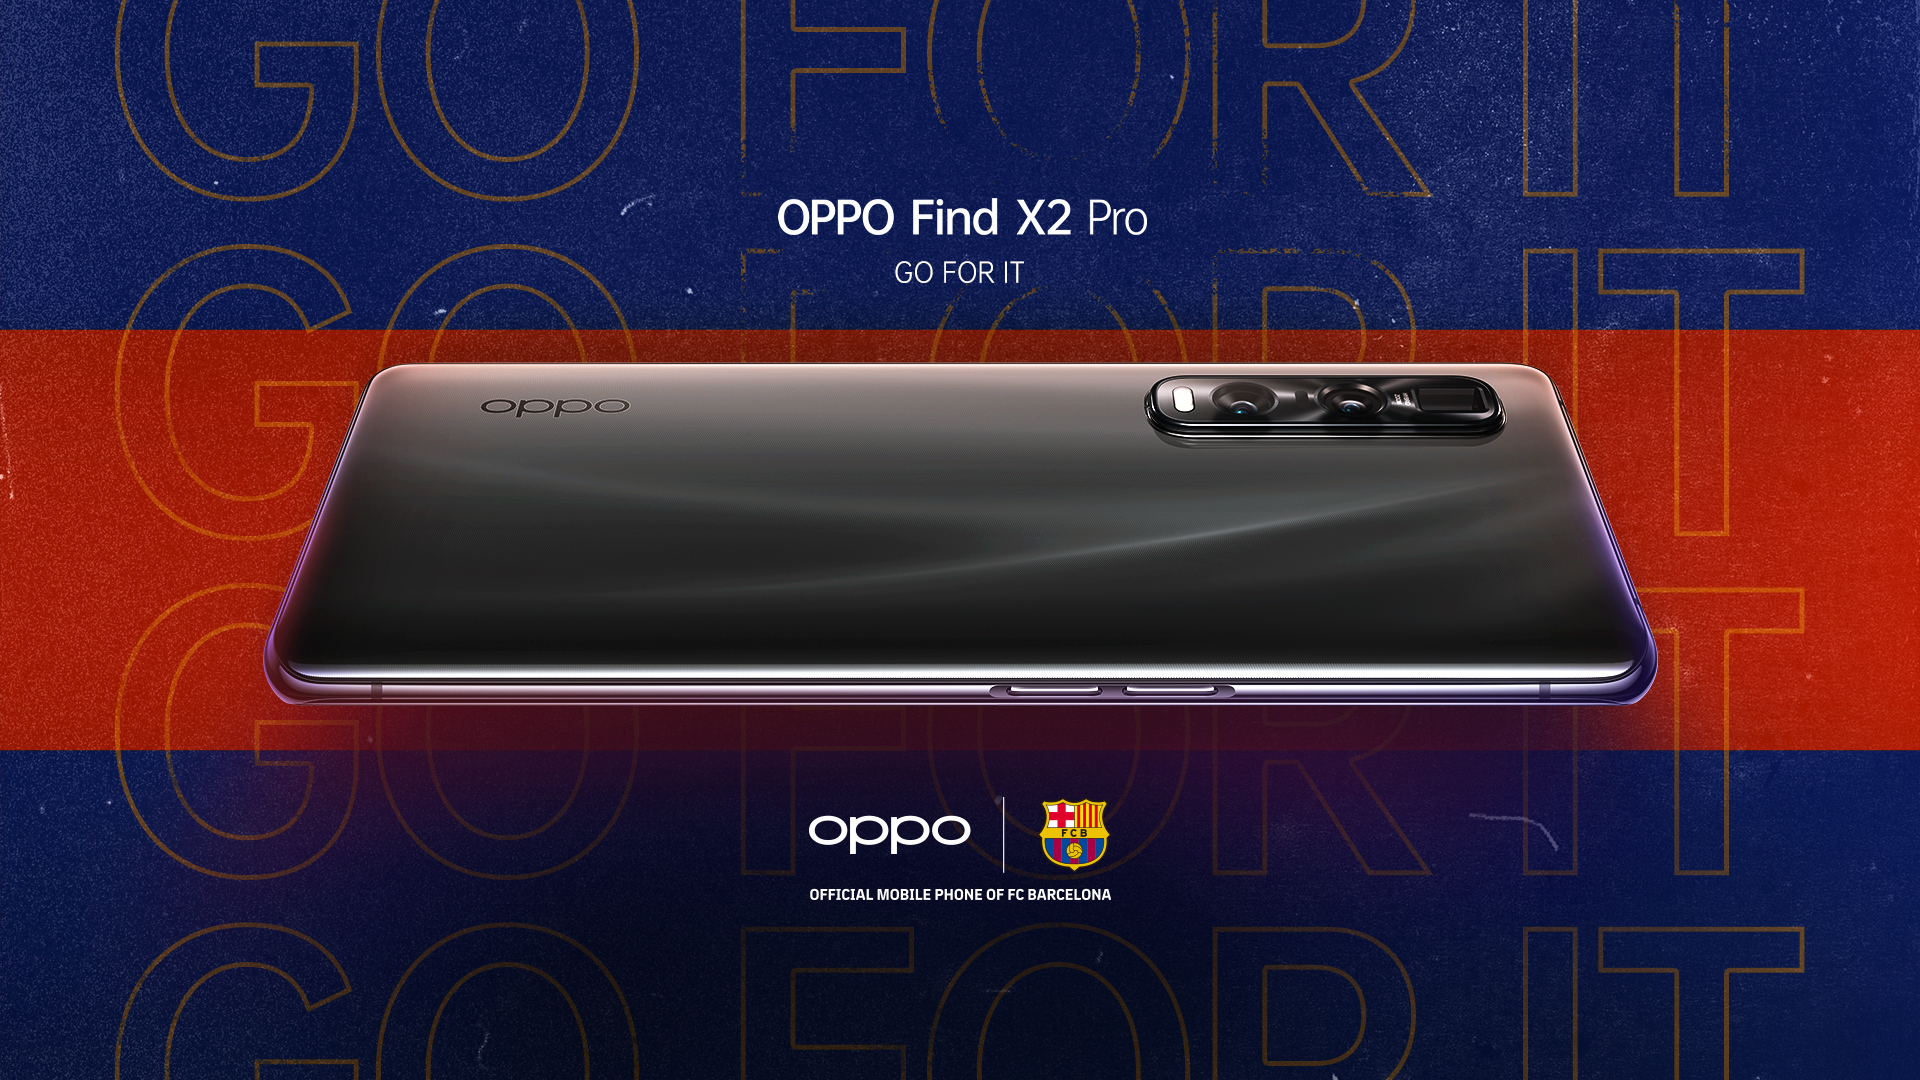 Case for Oppo A98 5G of FC Barcelona Barsa Blue Background - Official  License FC Barcelona